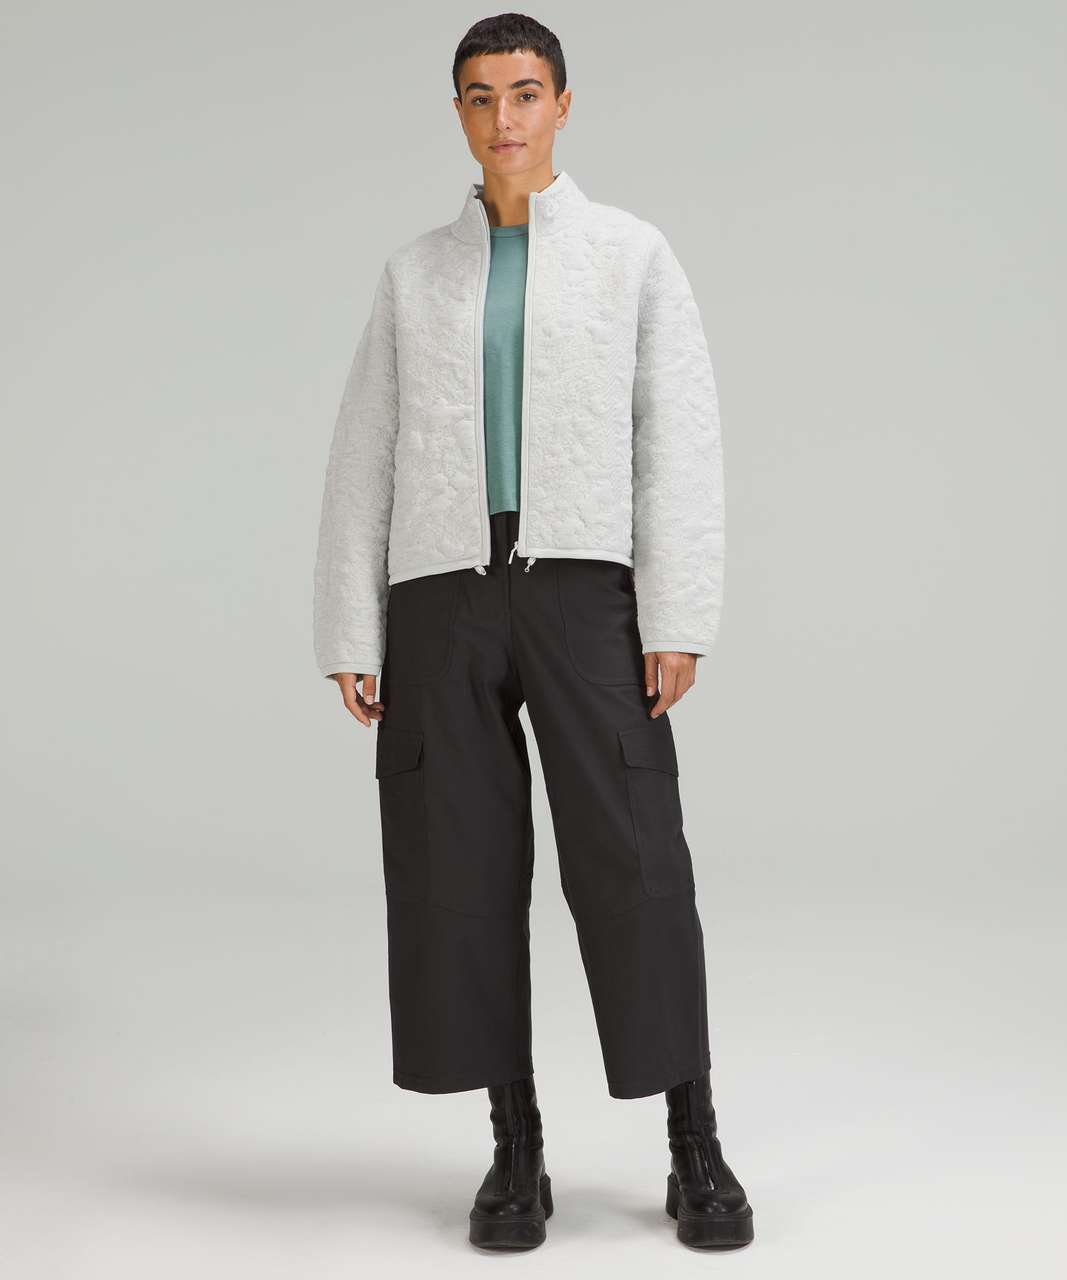 Lululemon Jacquard Multi-Texture Sweater Jacket - Heathered Vapor - lulu  fanatics